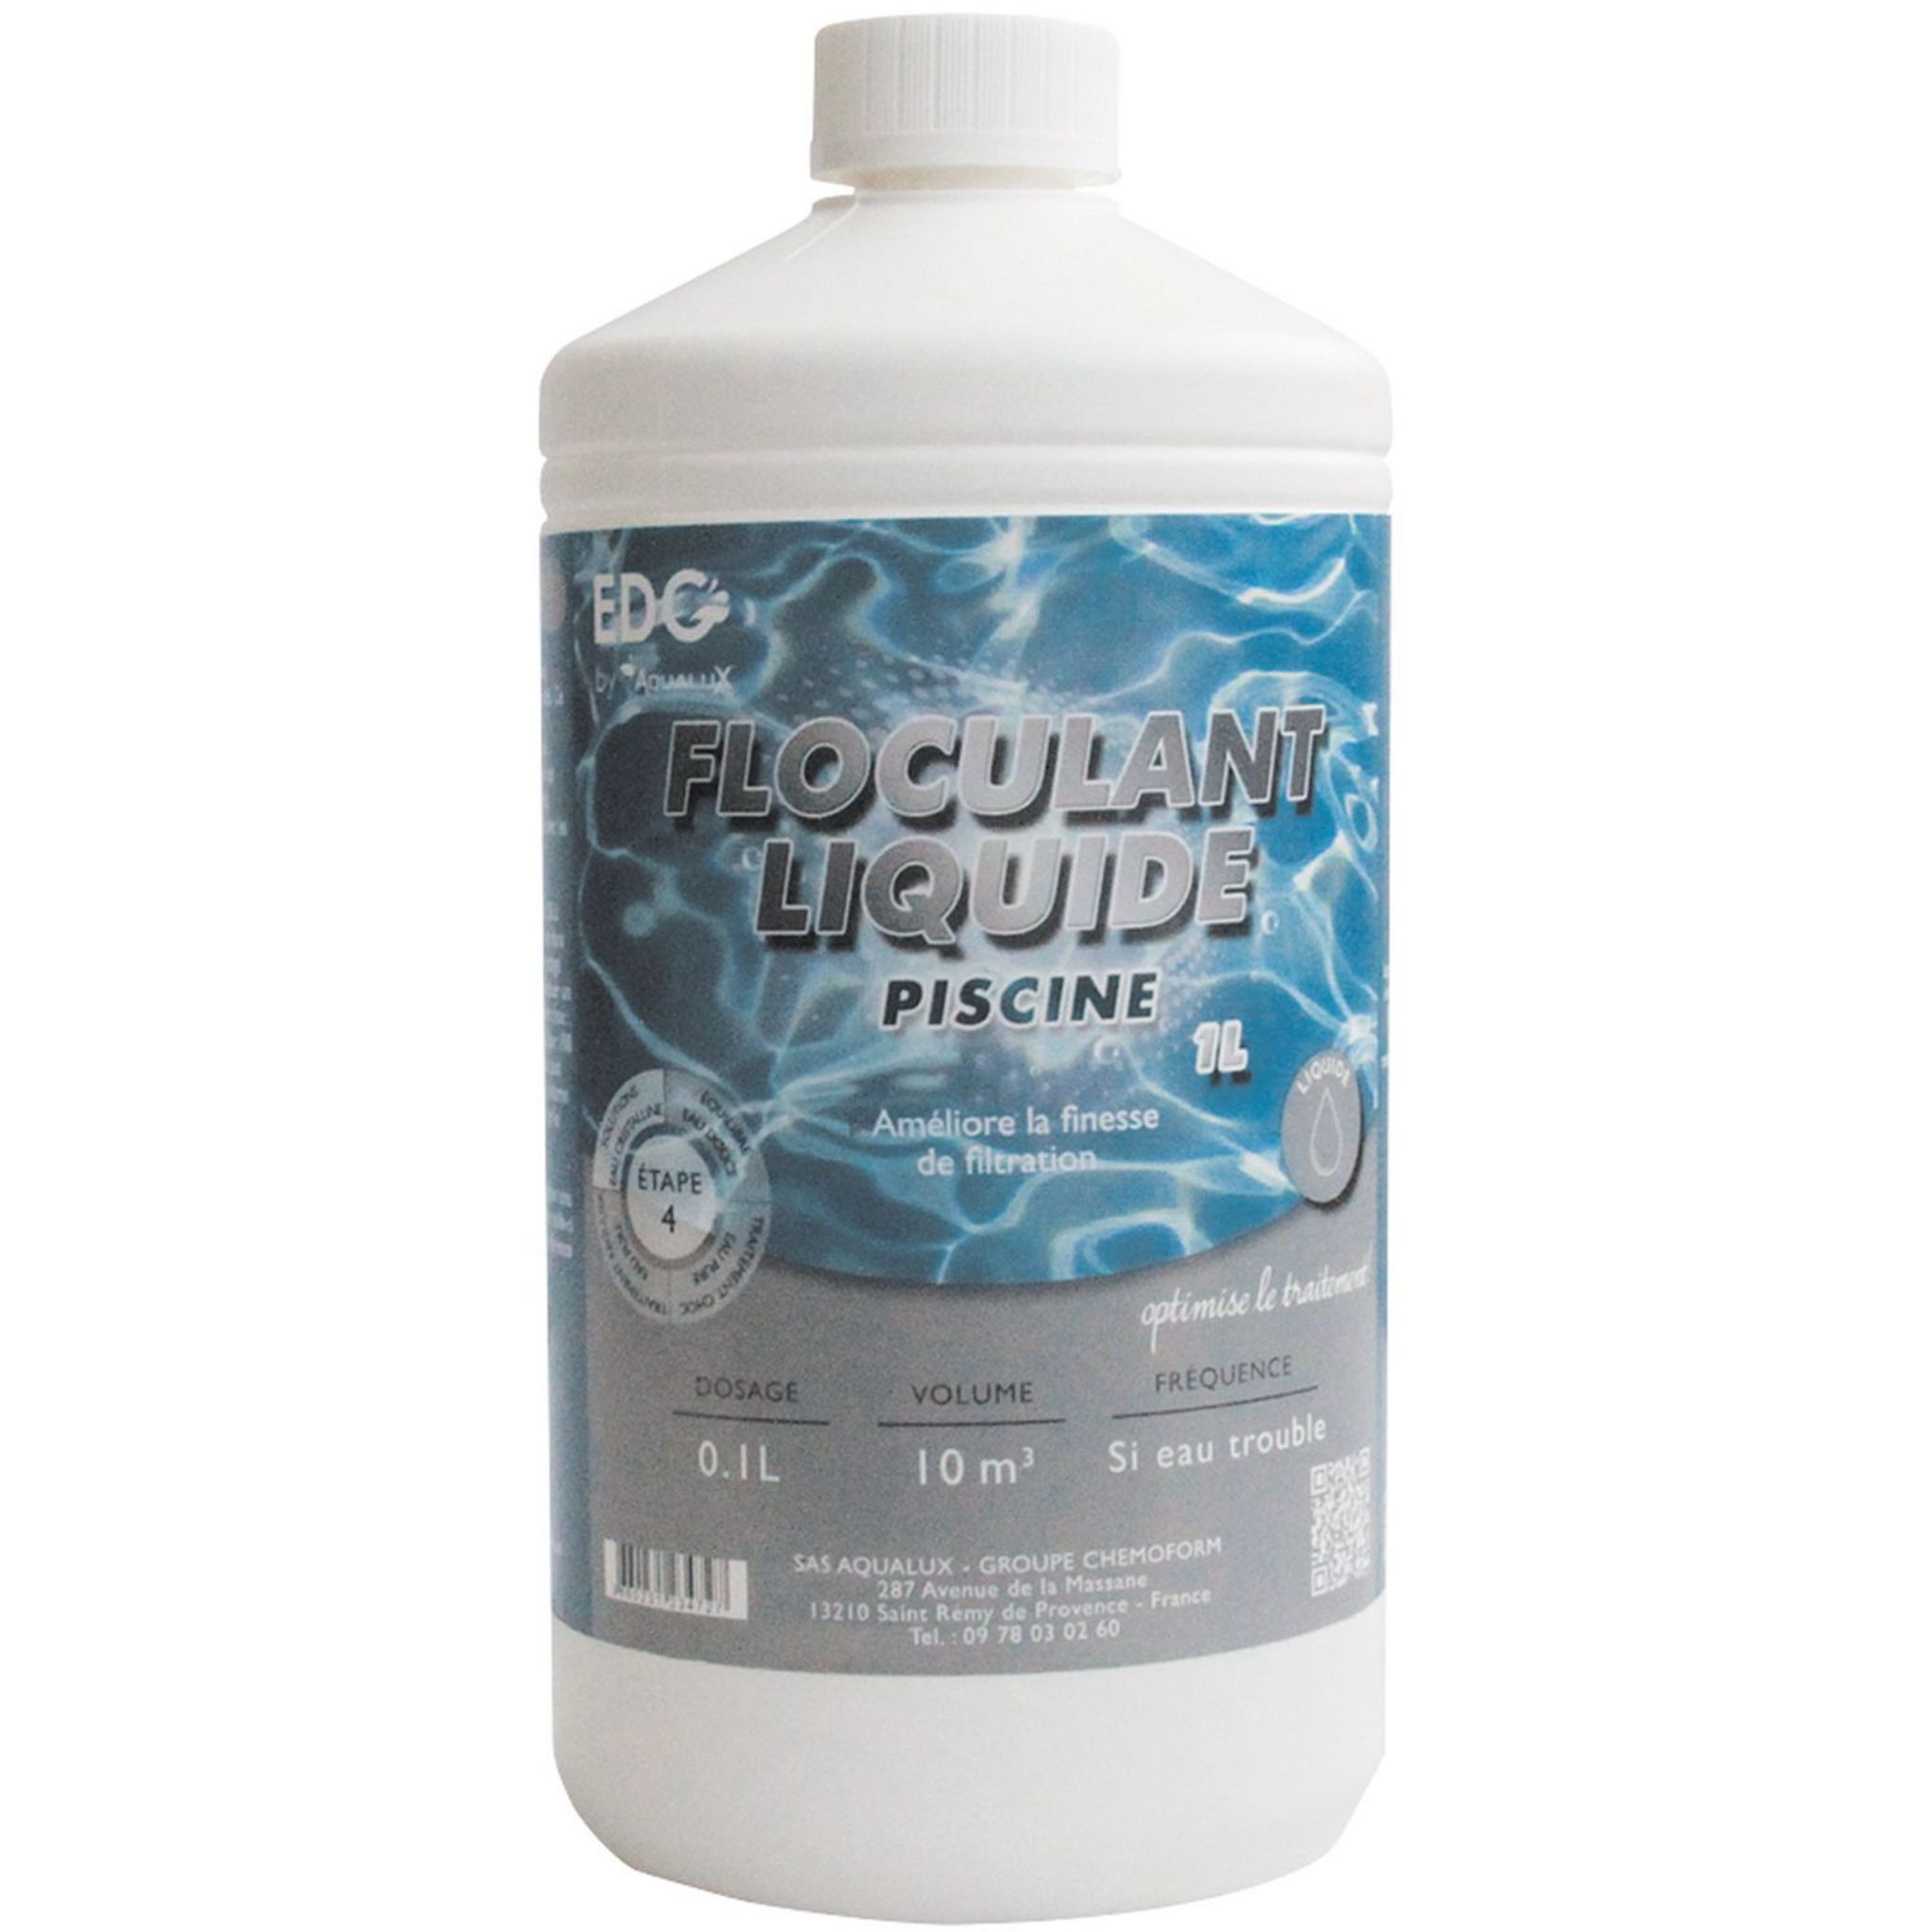 EDG By Aqualux Floculant clarifiant piscine - liquide bidon 1L pas